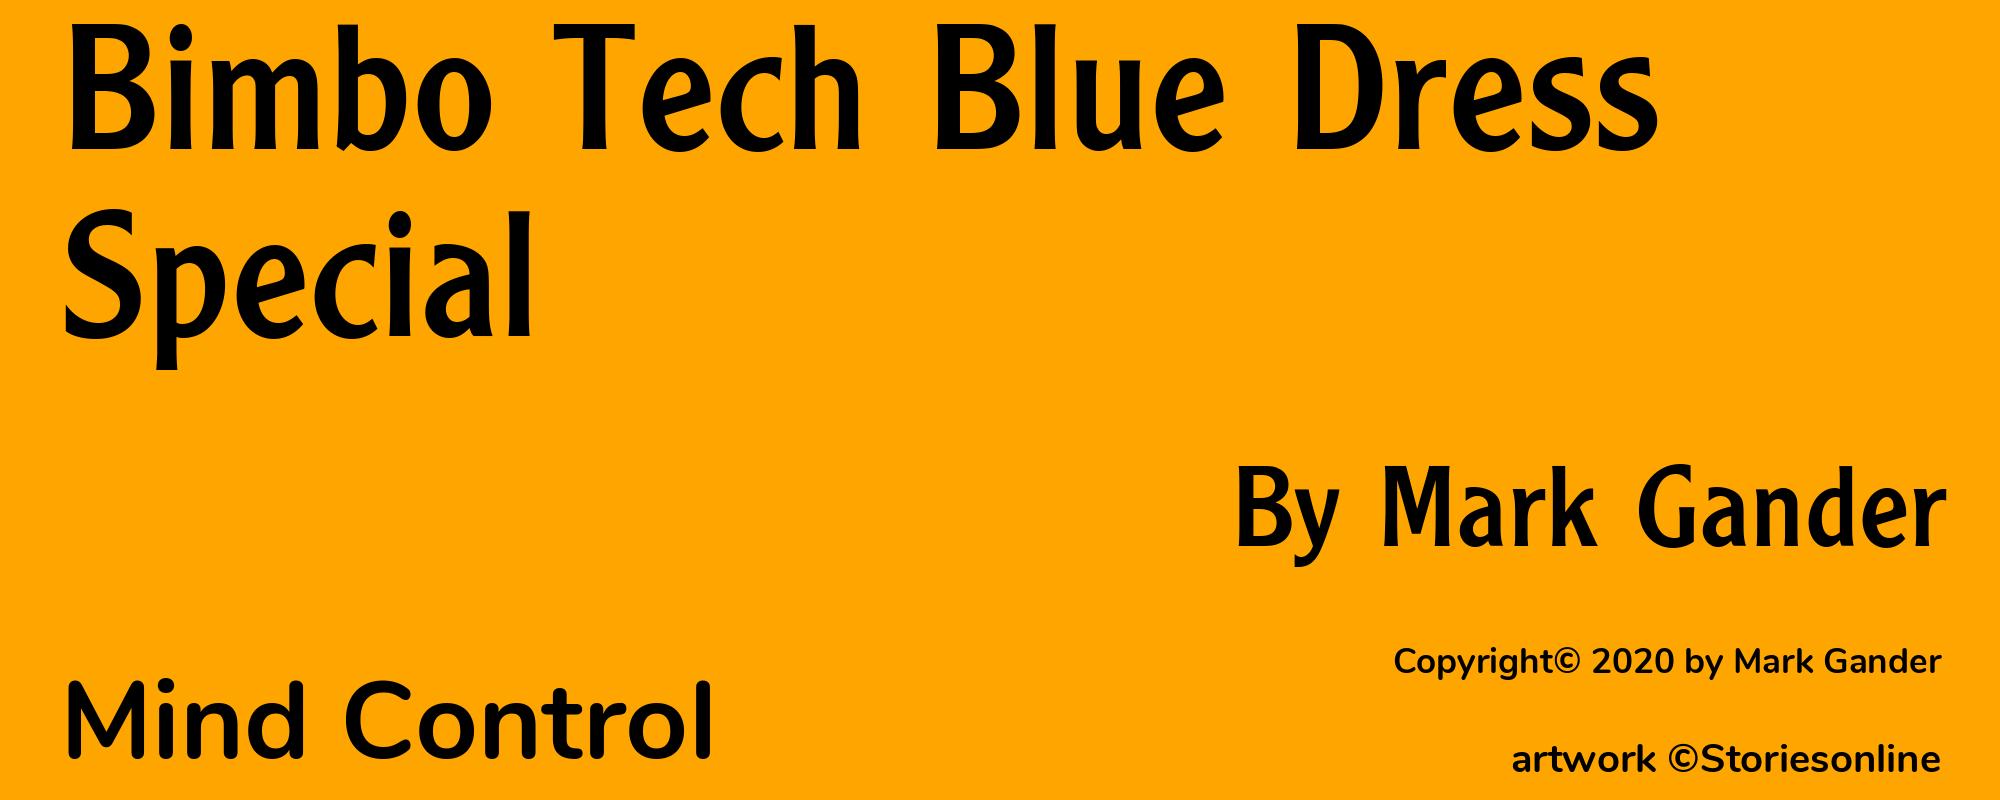 Bimbo Tech Blue Dress Special - Cover